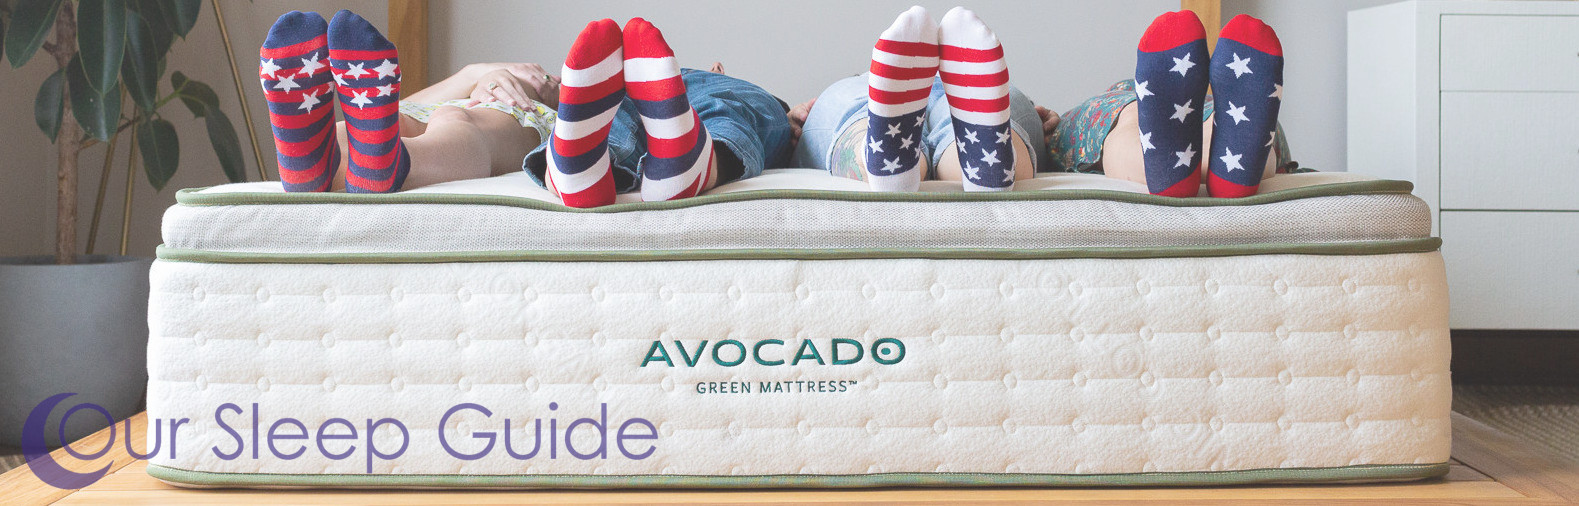 avocado latex hybrid mattress review